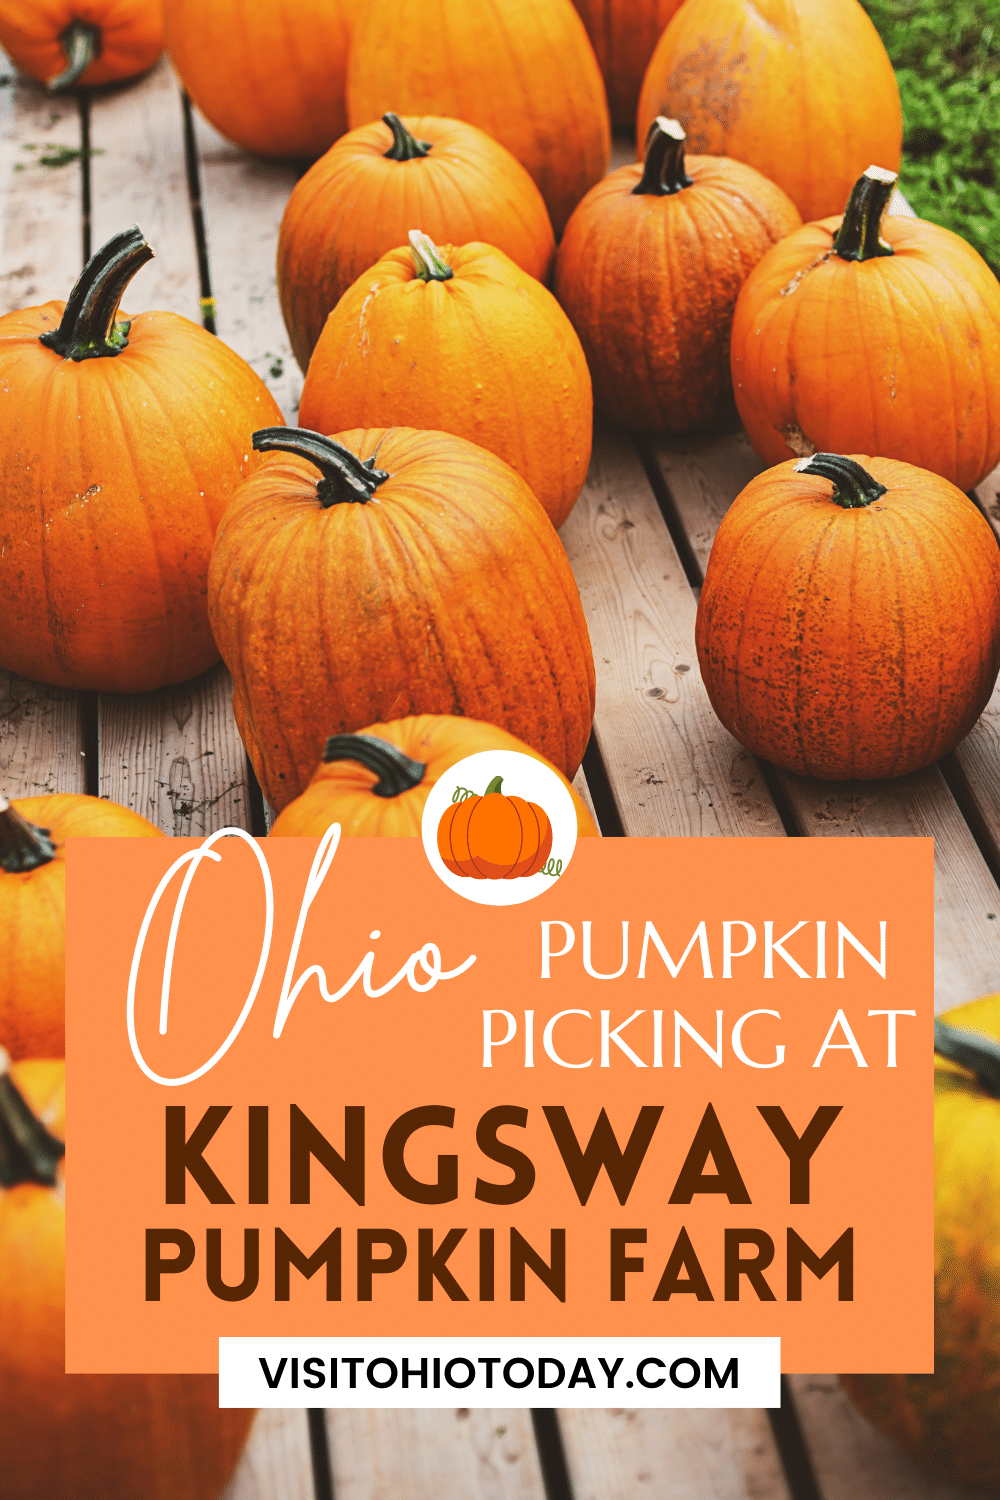 Text: Ohio Pumpkin PIcking at Kingsway Pumpkim Farm with orange pumpkins on a wood slat deck